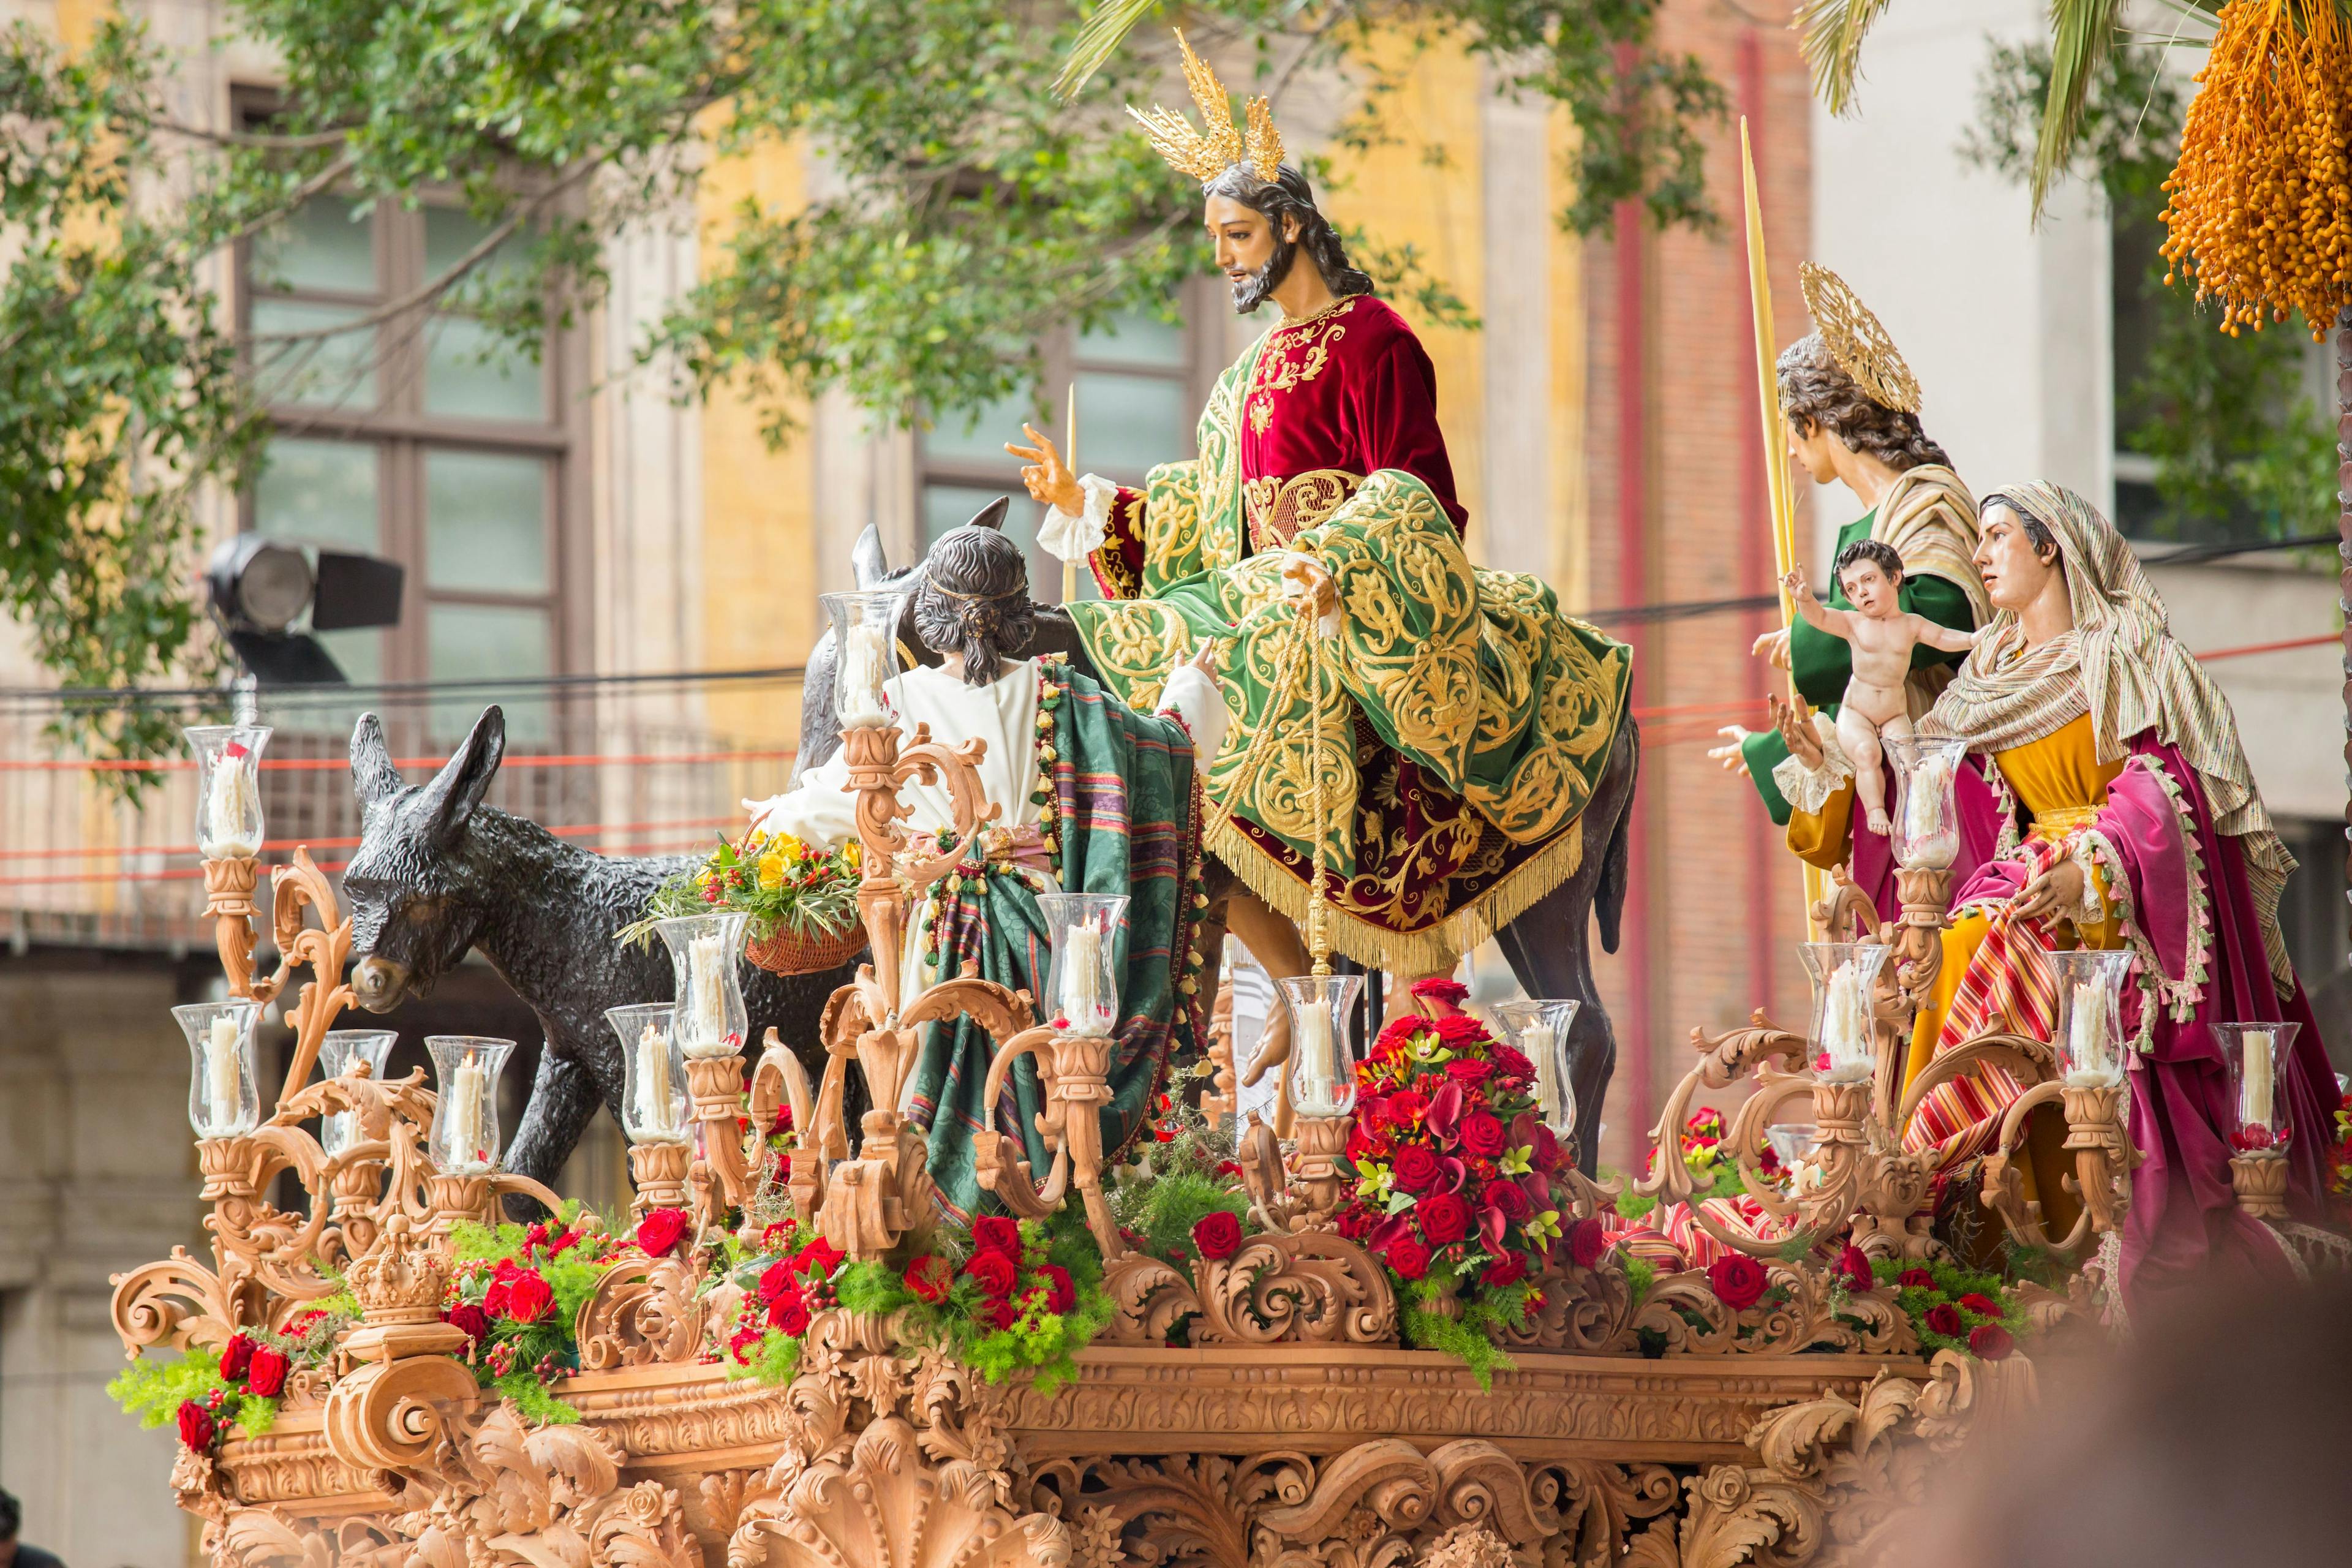  Vibrant Cultural Festivals in Spain  - Semanta Santa - RatePunk